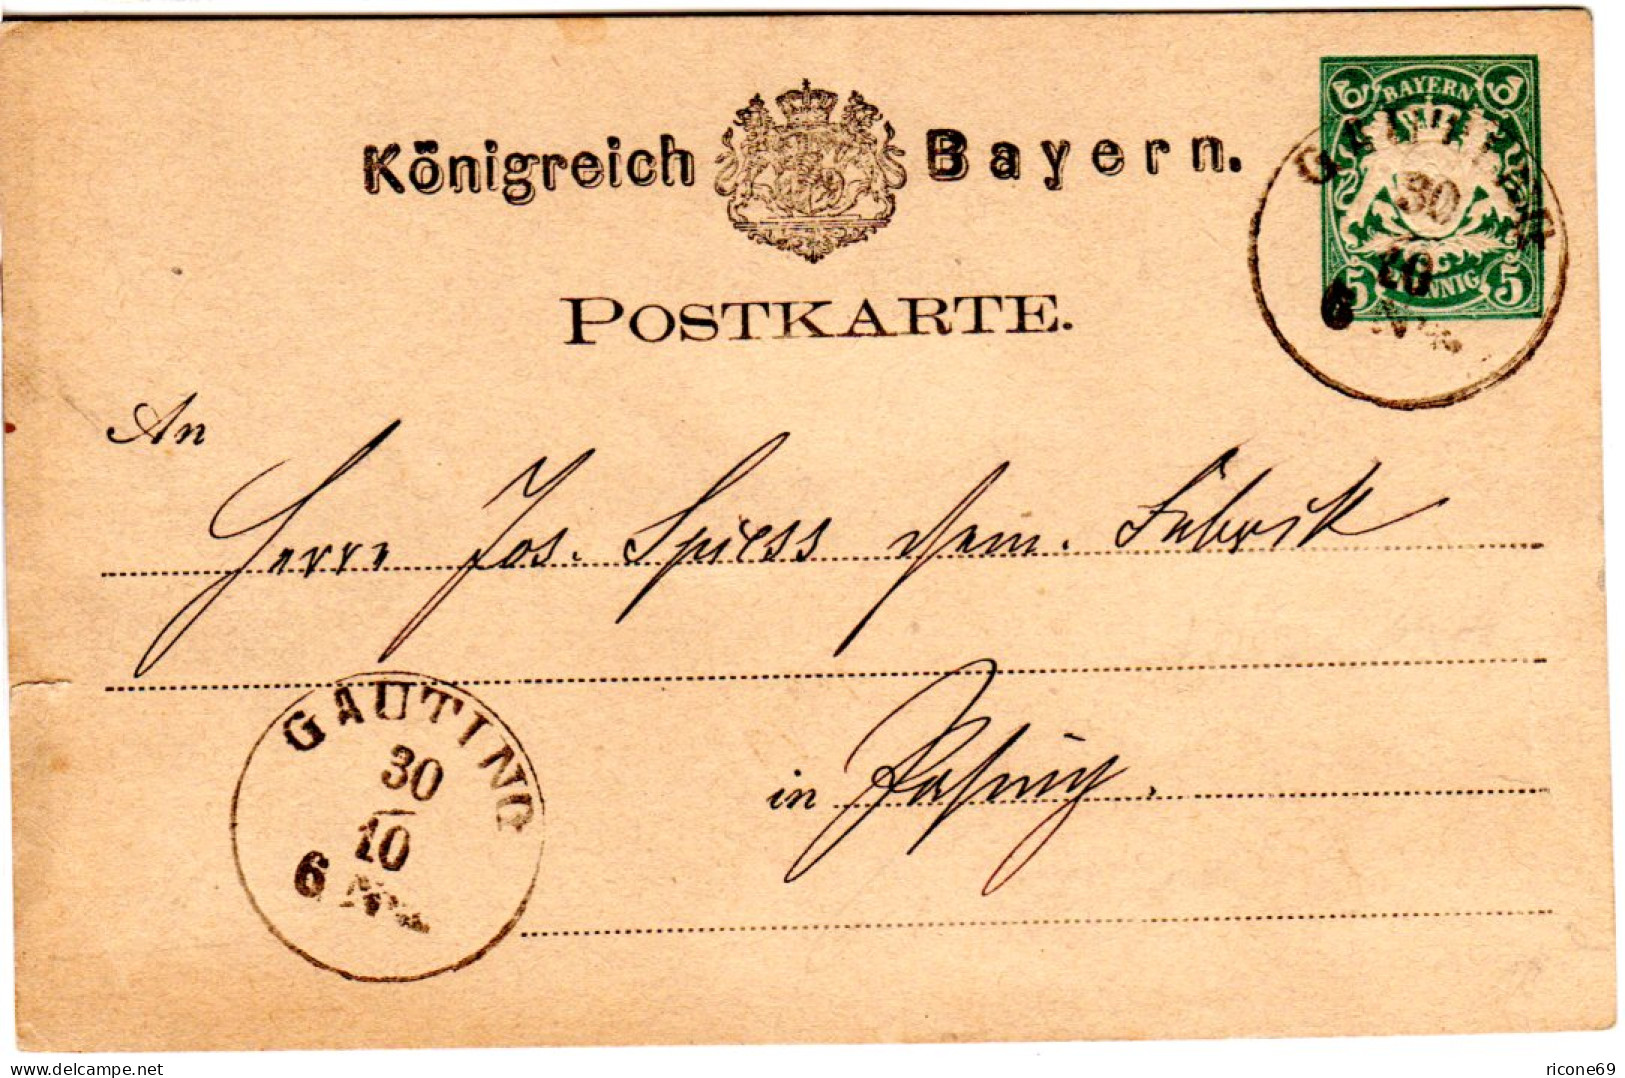 Bayern 1878, K1 GAUTING Auf 5 Pf. Ganzsache N. Pasing. - Covers & Documents